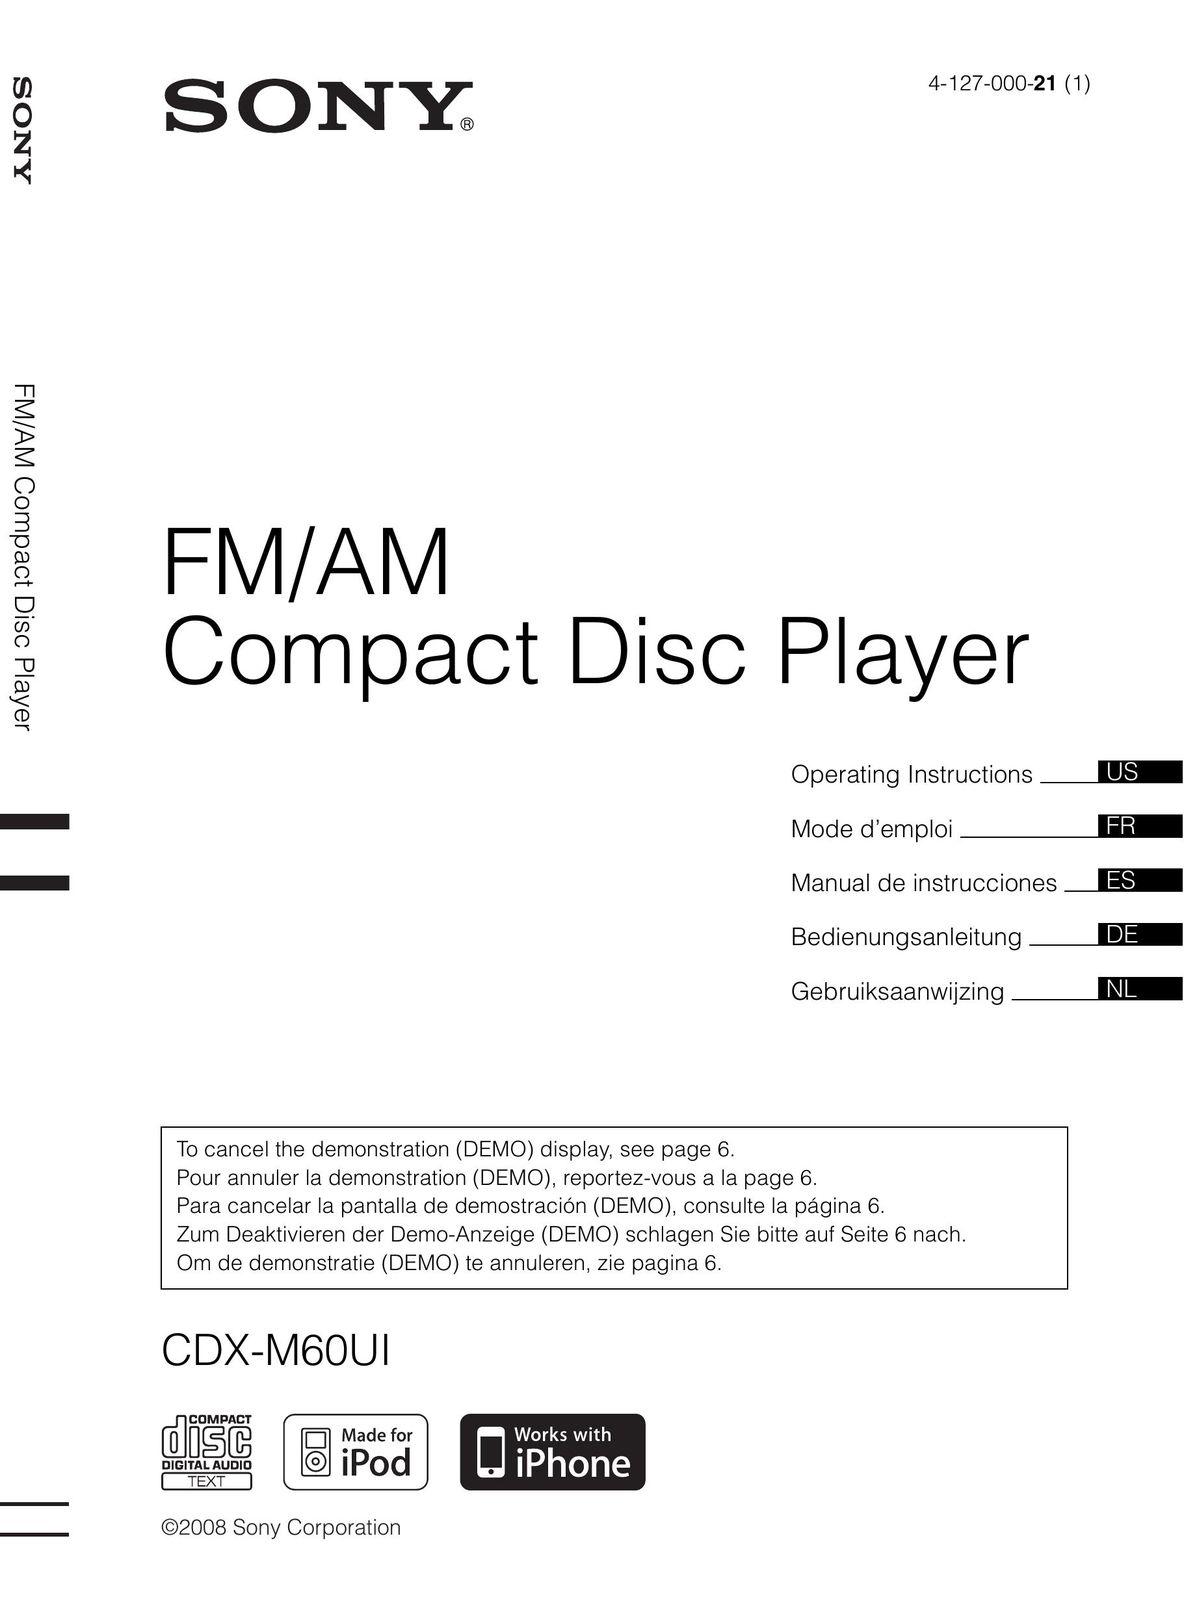 Sony CDX-M60UI Portable CD Player User Manual